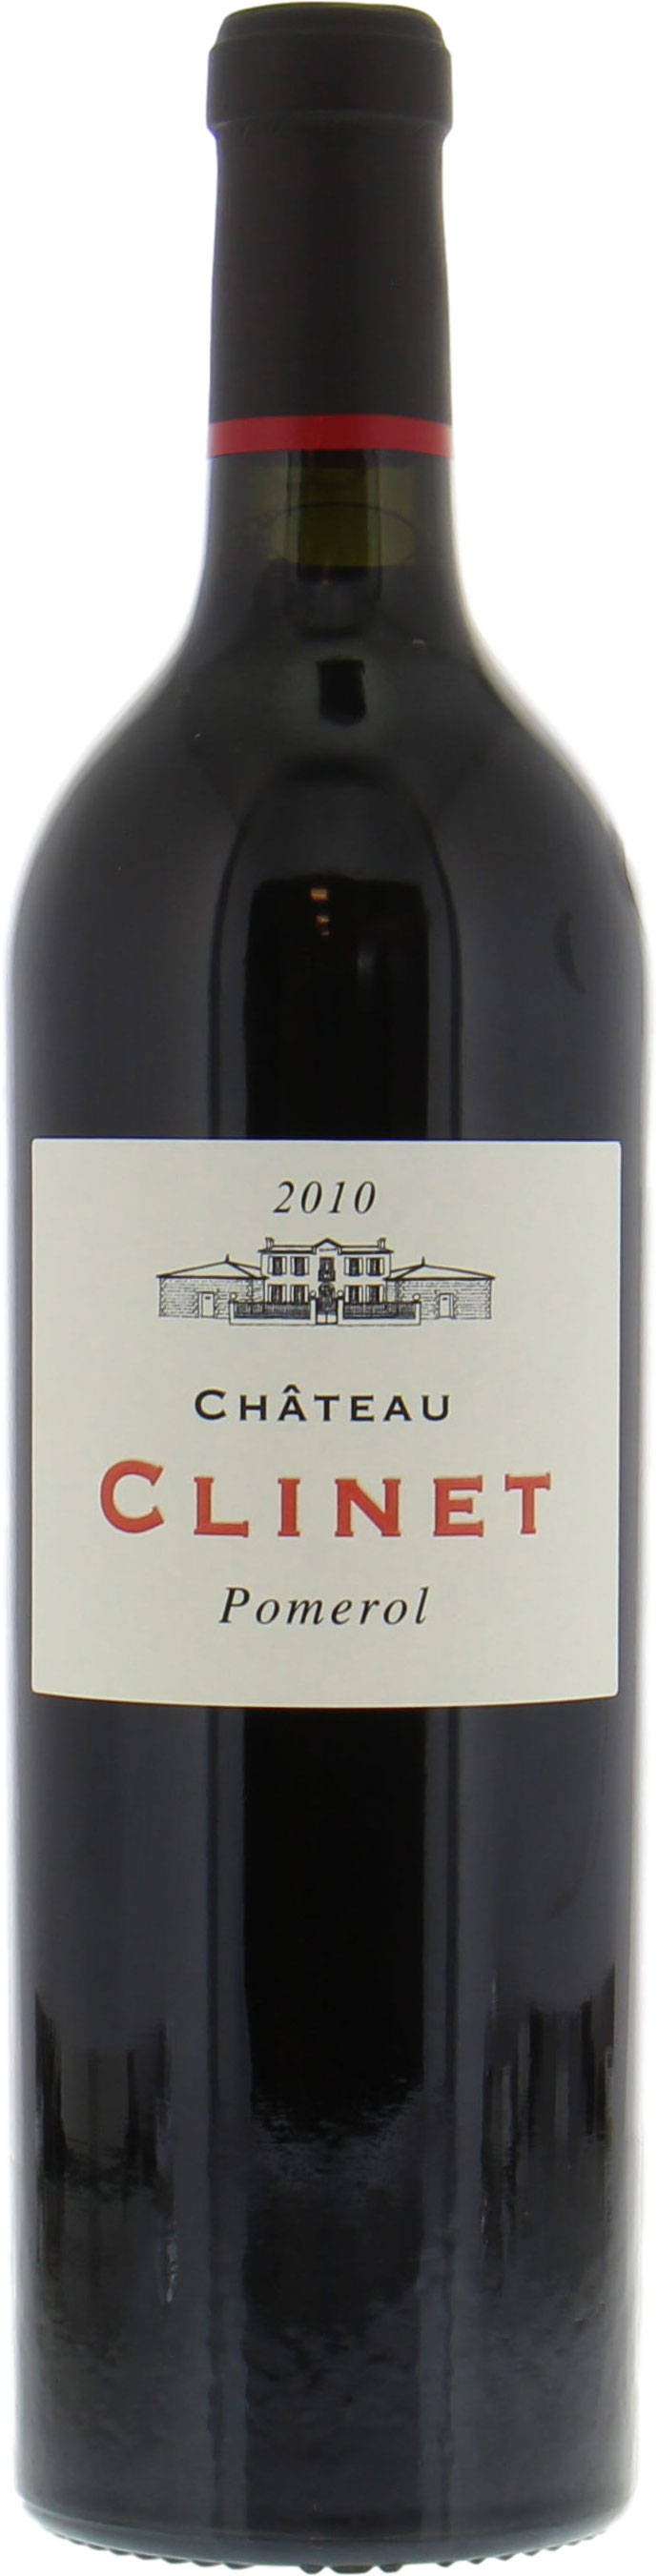 Chateau Clinet - Chateau Clinet 2010 Perfect